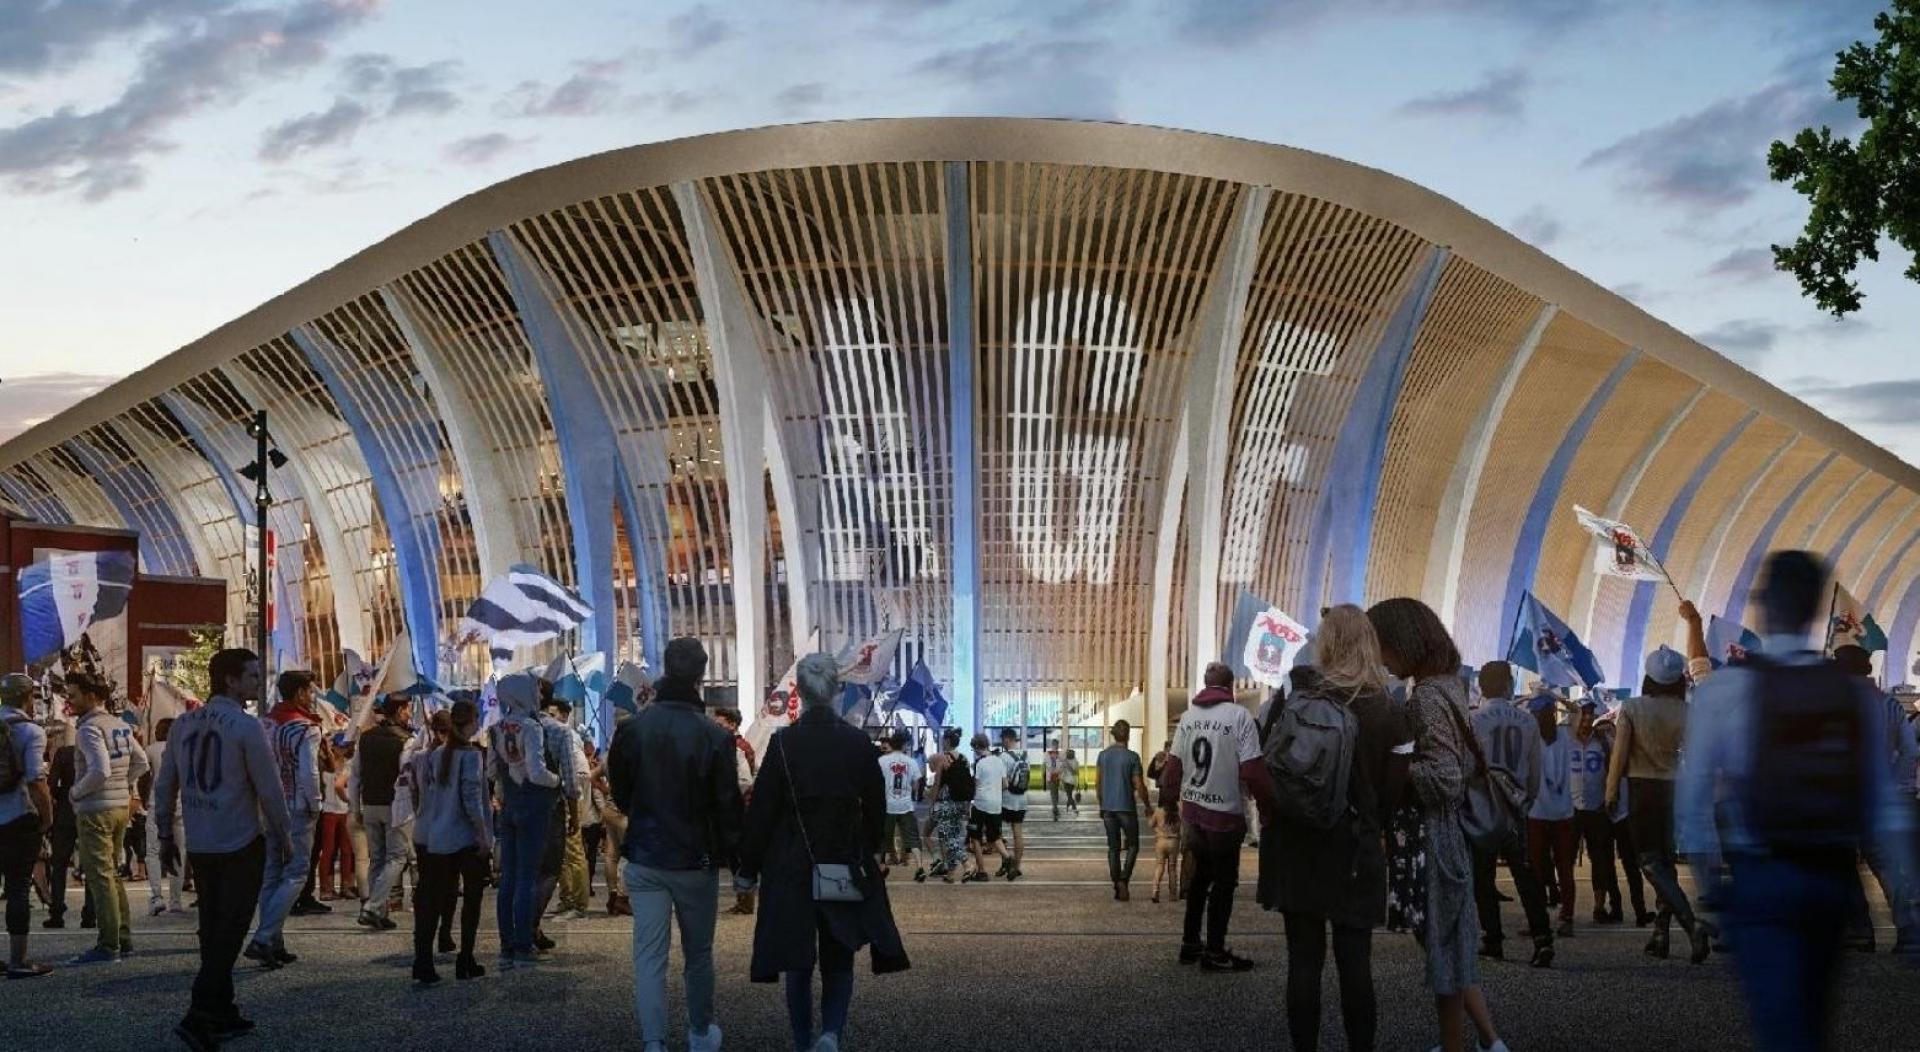 Zaha Hadid Architects har designet Aarhus nye stadion sammen med Tredje Natur og Sweco. Den samlede økonomiske ramme for stadionprojektet er på 650 mio. kr. Visuasliseringer: Zaha Hadid Architects